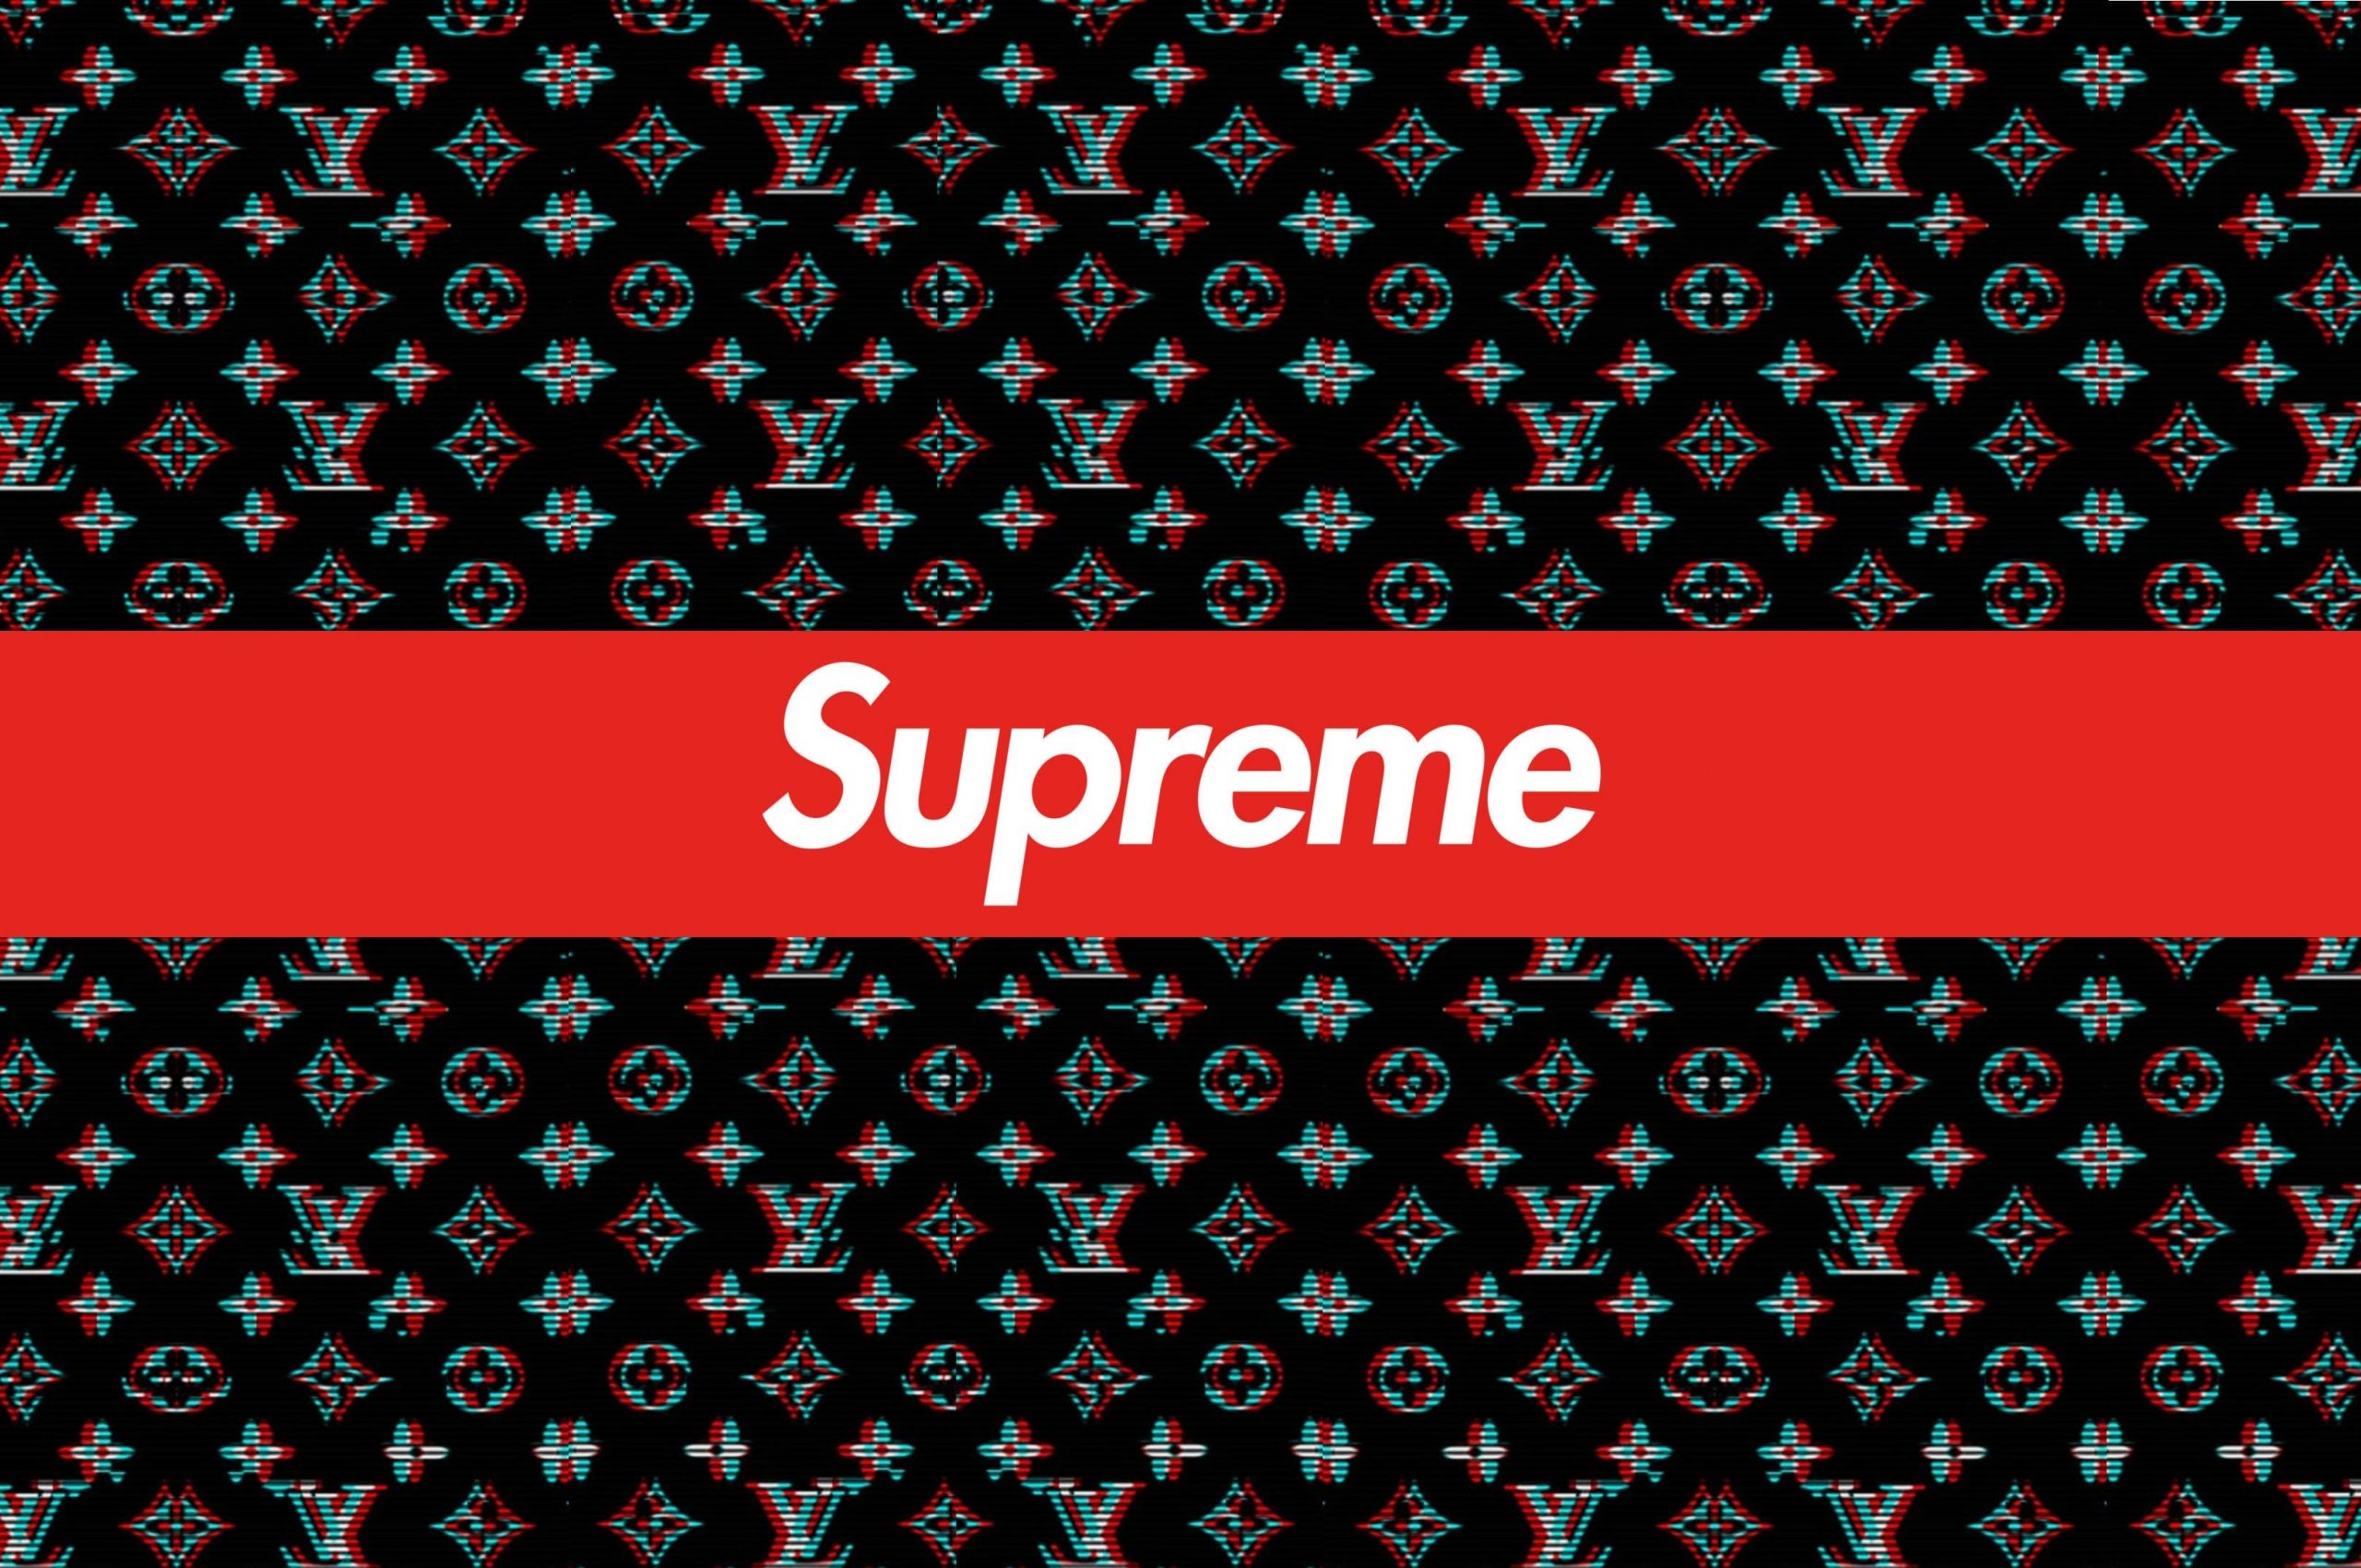 Free download Supreme Brand Wallpapers Top Supreme Brand.